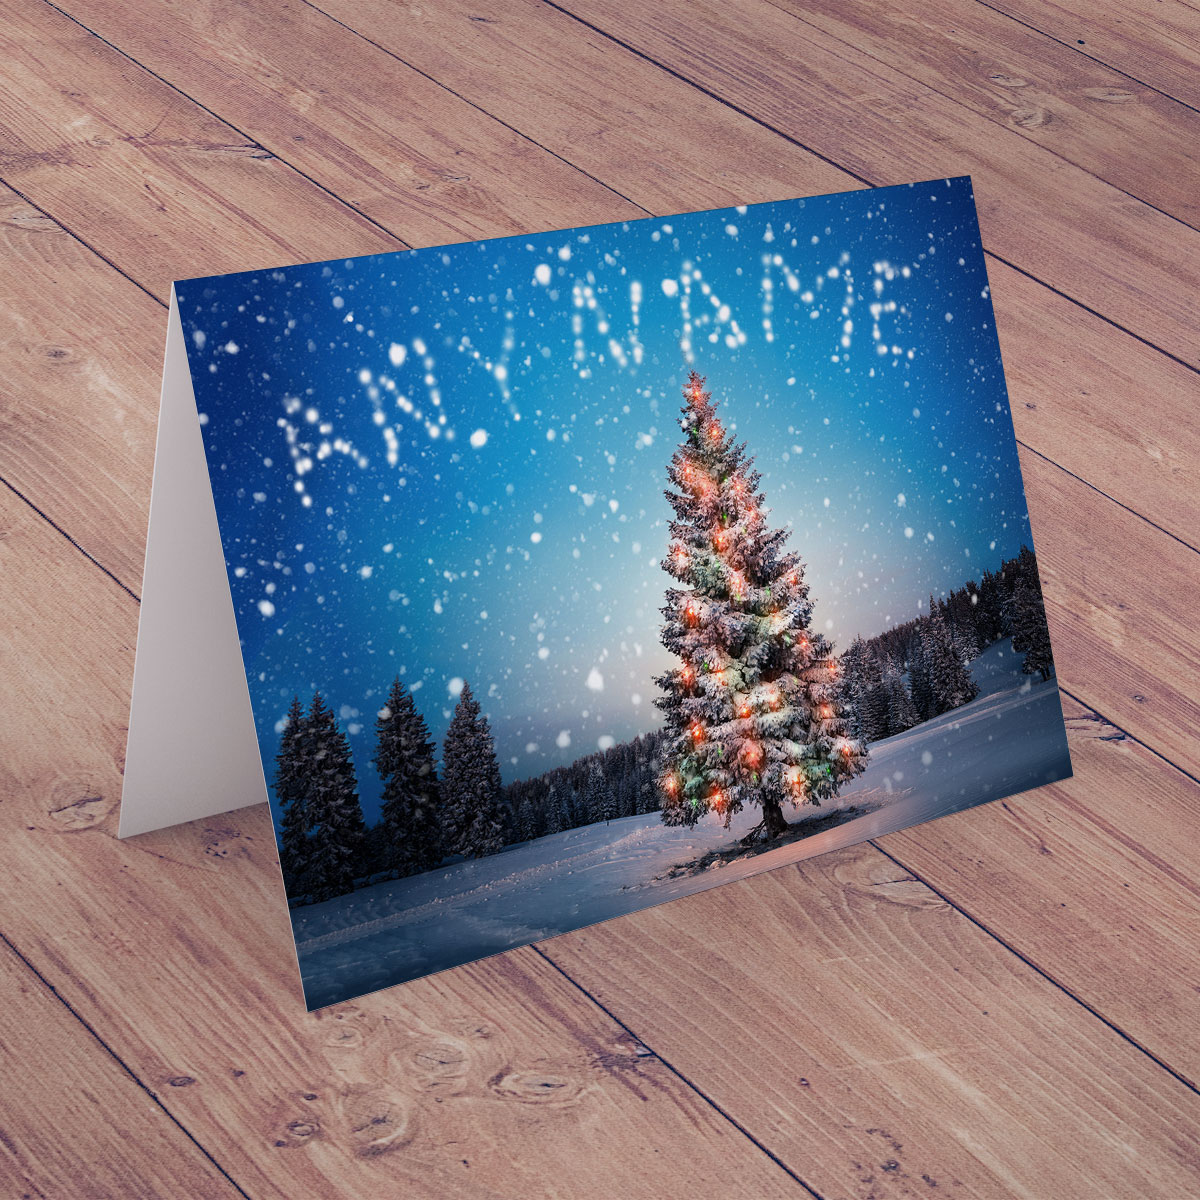 Personalised Christmas Card - Snowy Christmas Tree